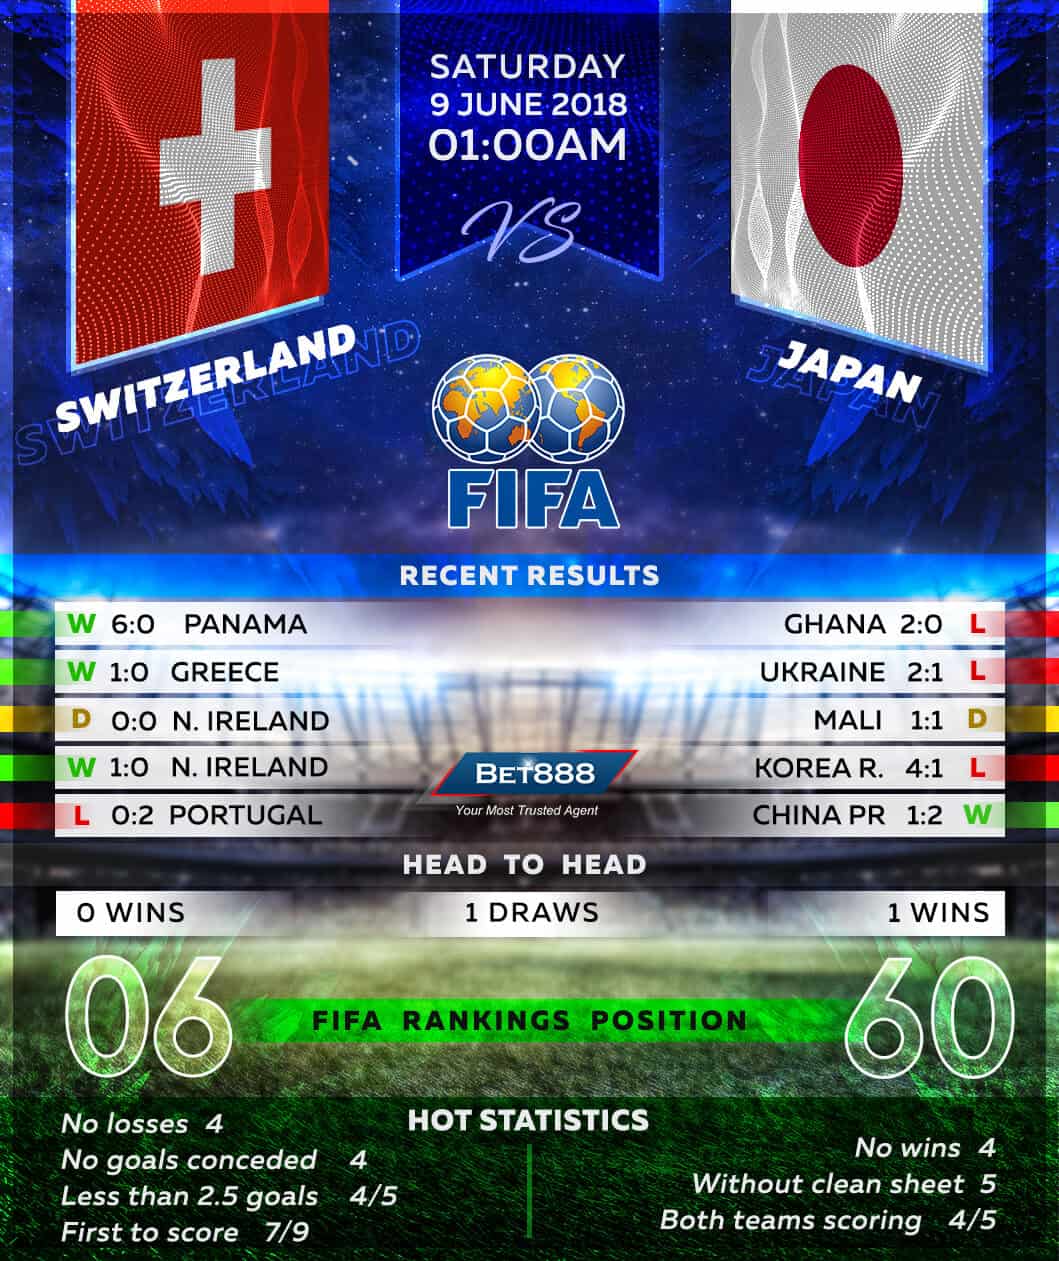 Switzerland vs Japan 09/06/18